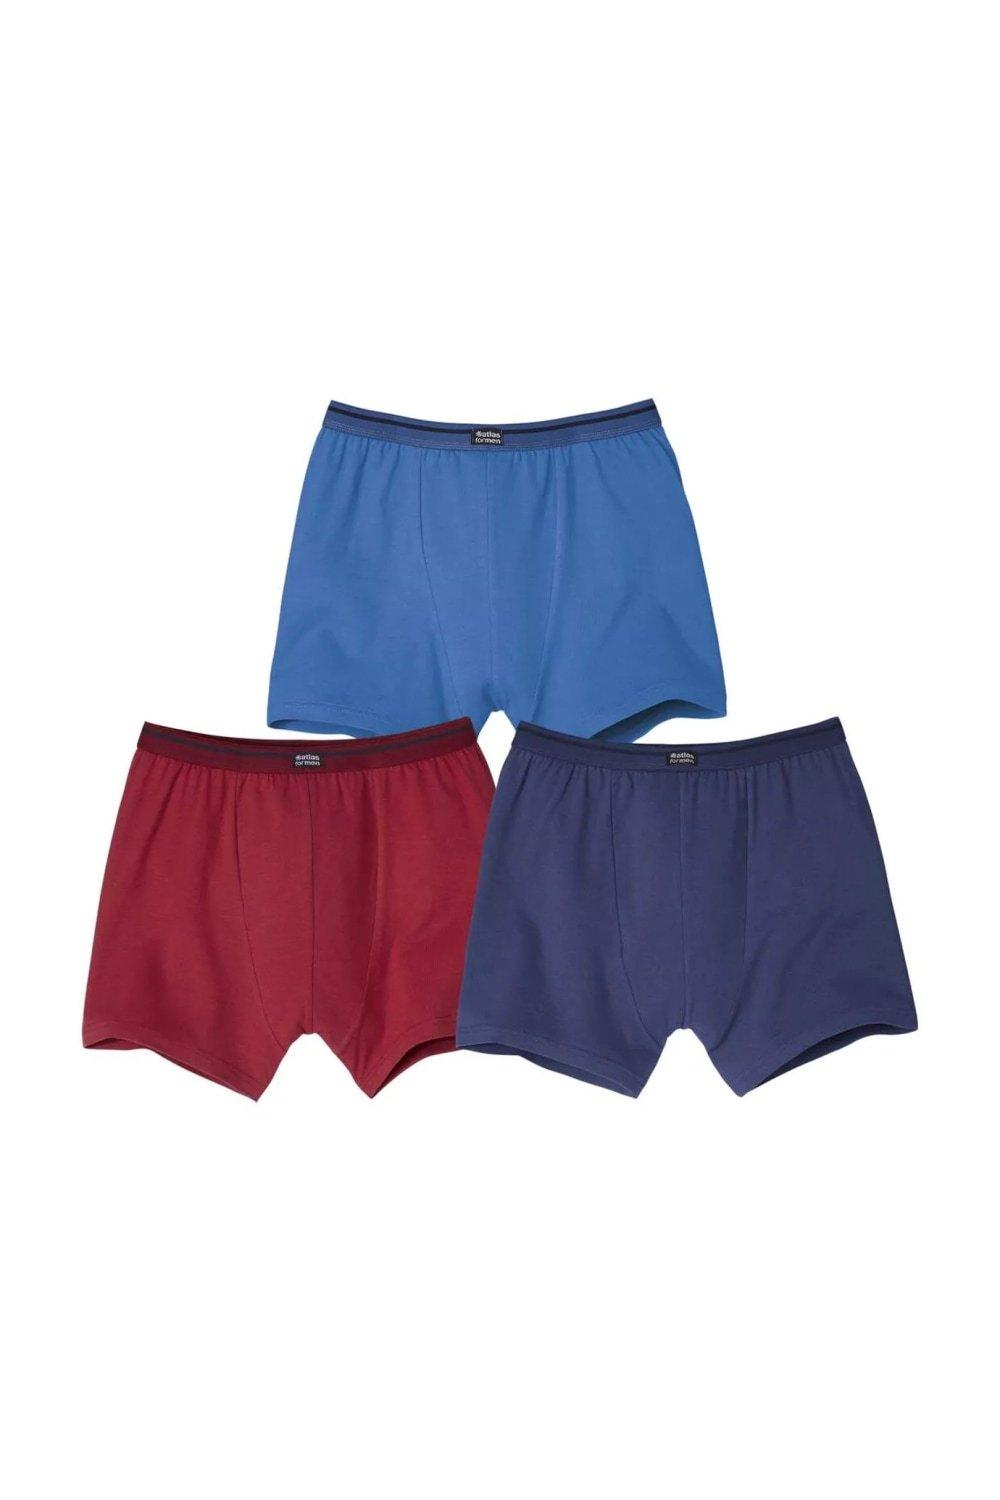 Plain Boxer Shorts (Pack of 3)